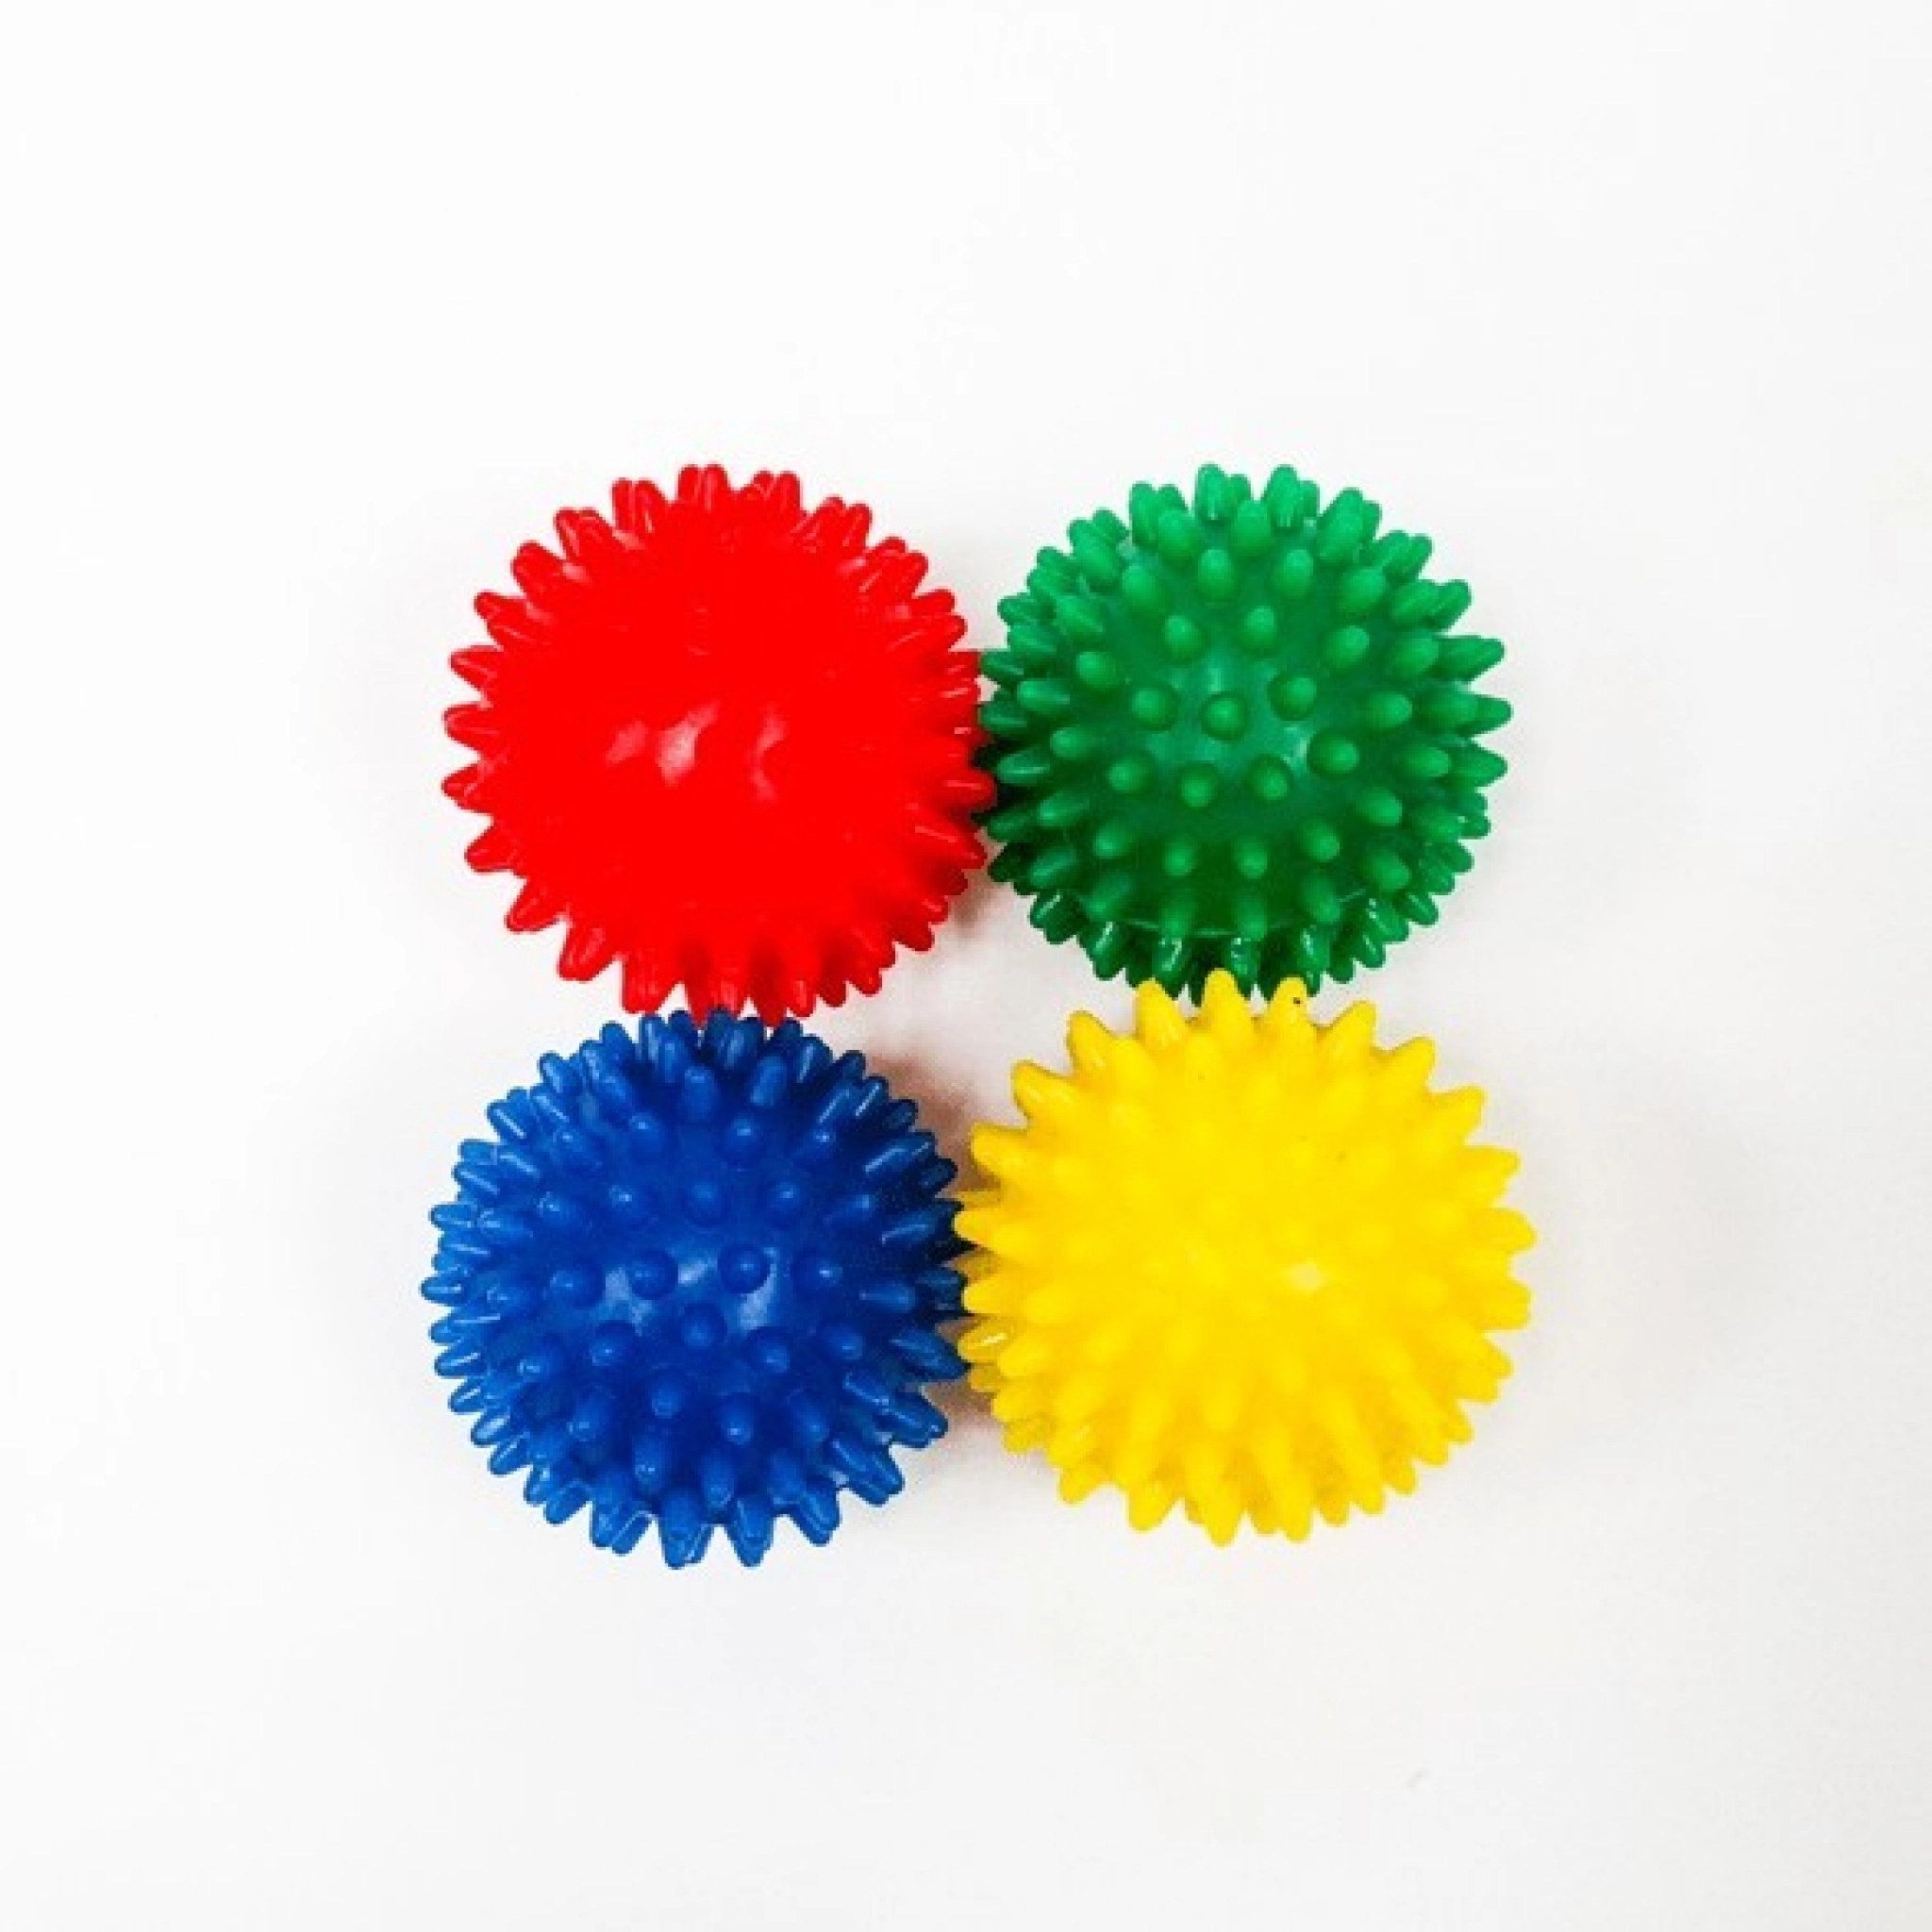 Японский шар с шипами 5. Мячик для массажа. Мяч массажный с шипами. Мячи массажные с шипами для детей. Массажные мячики для де.